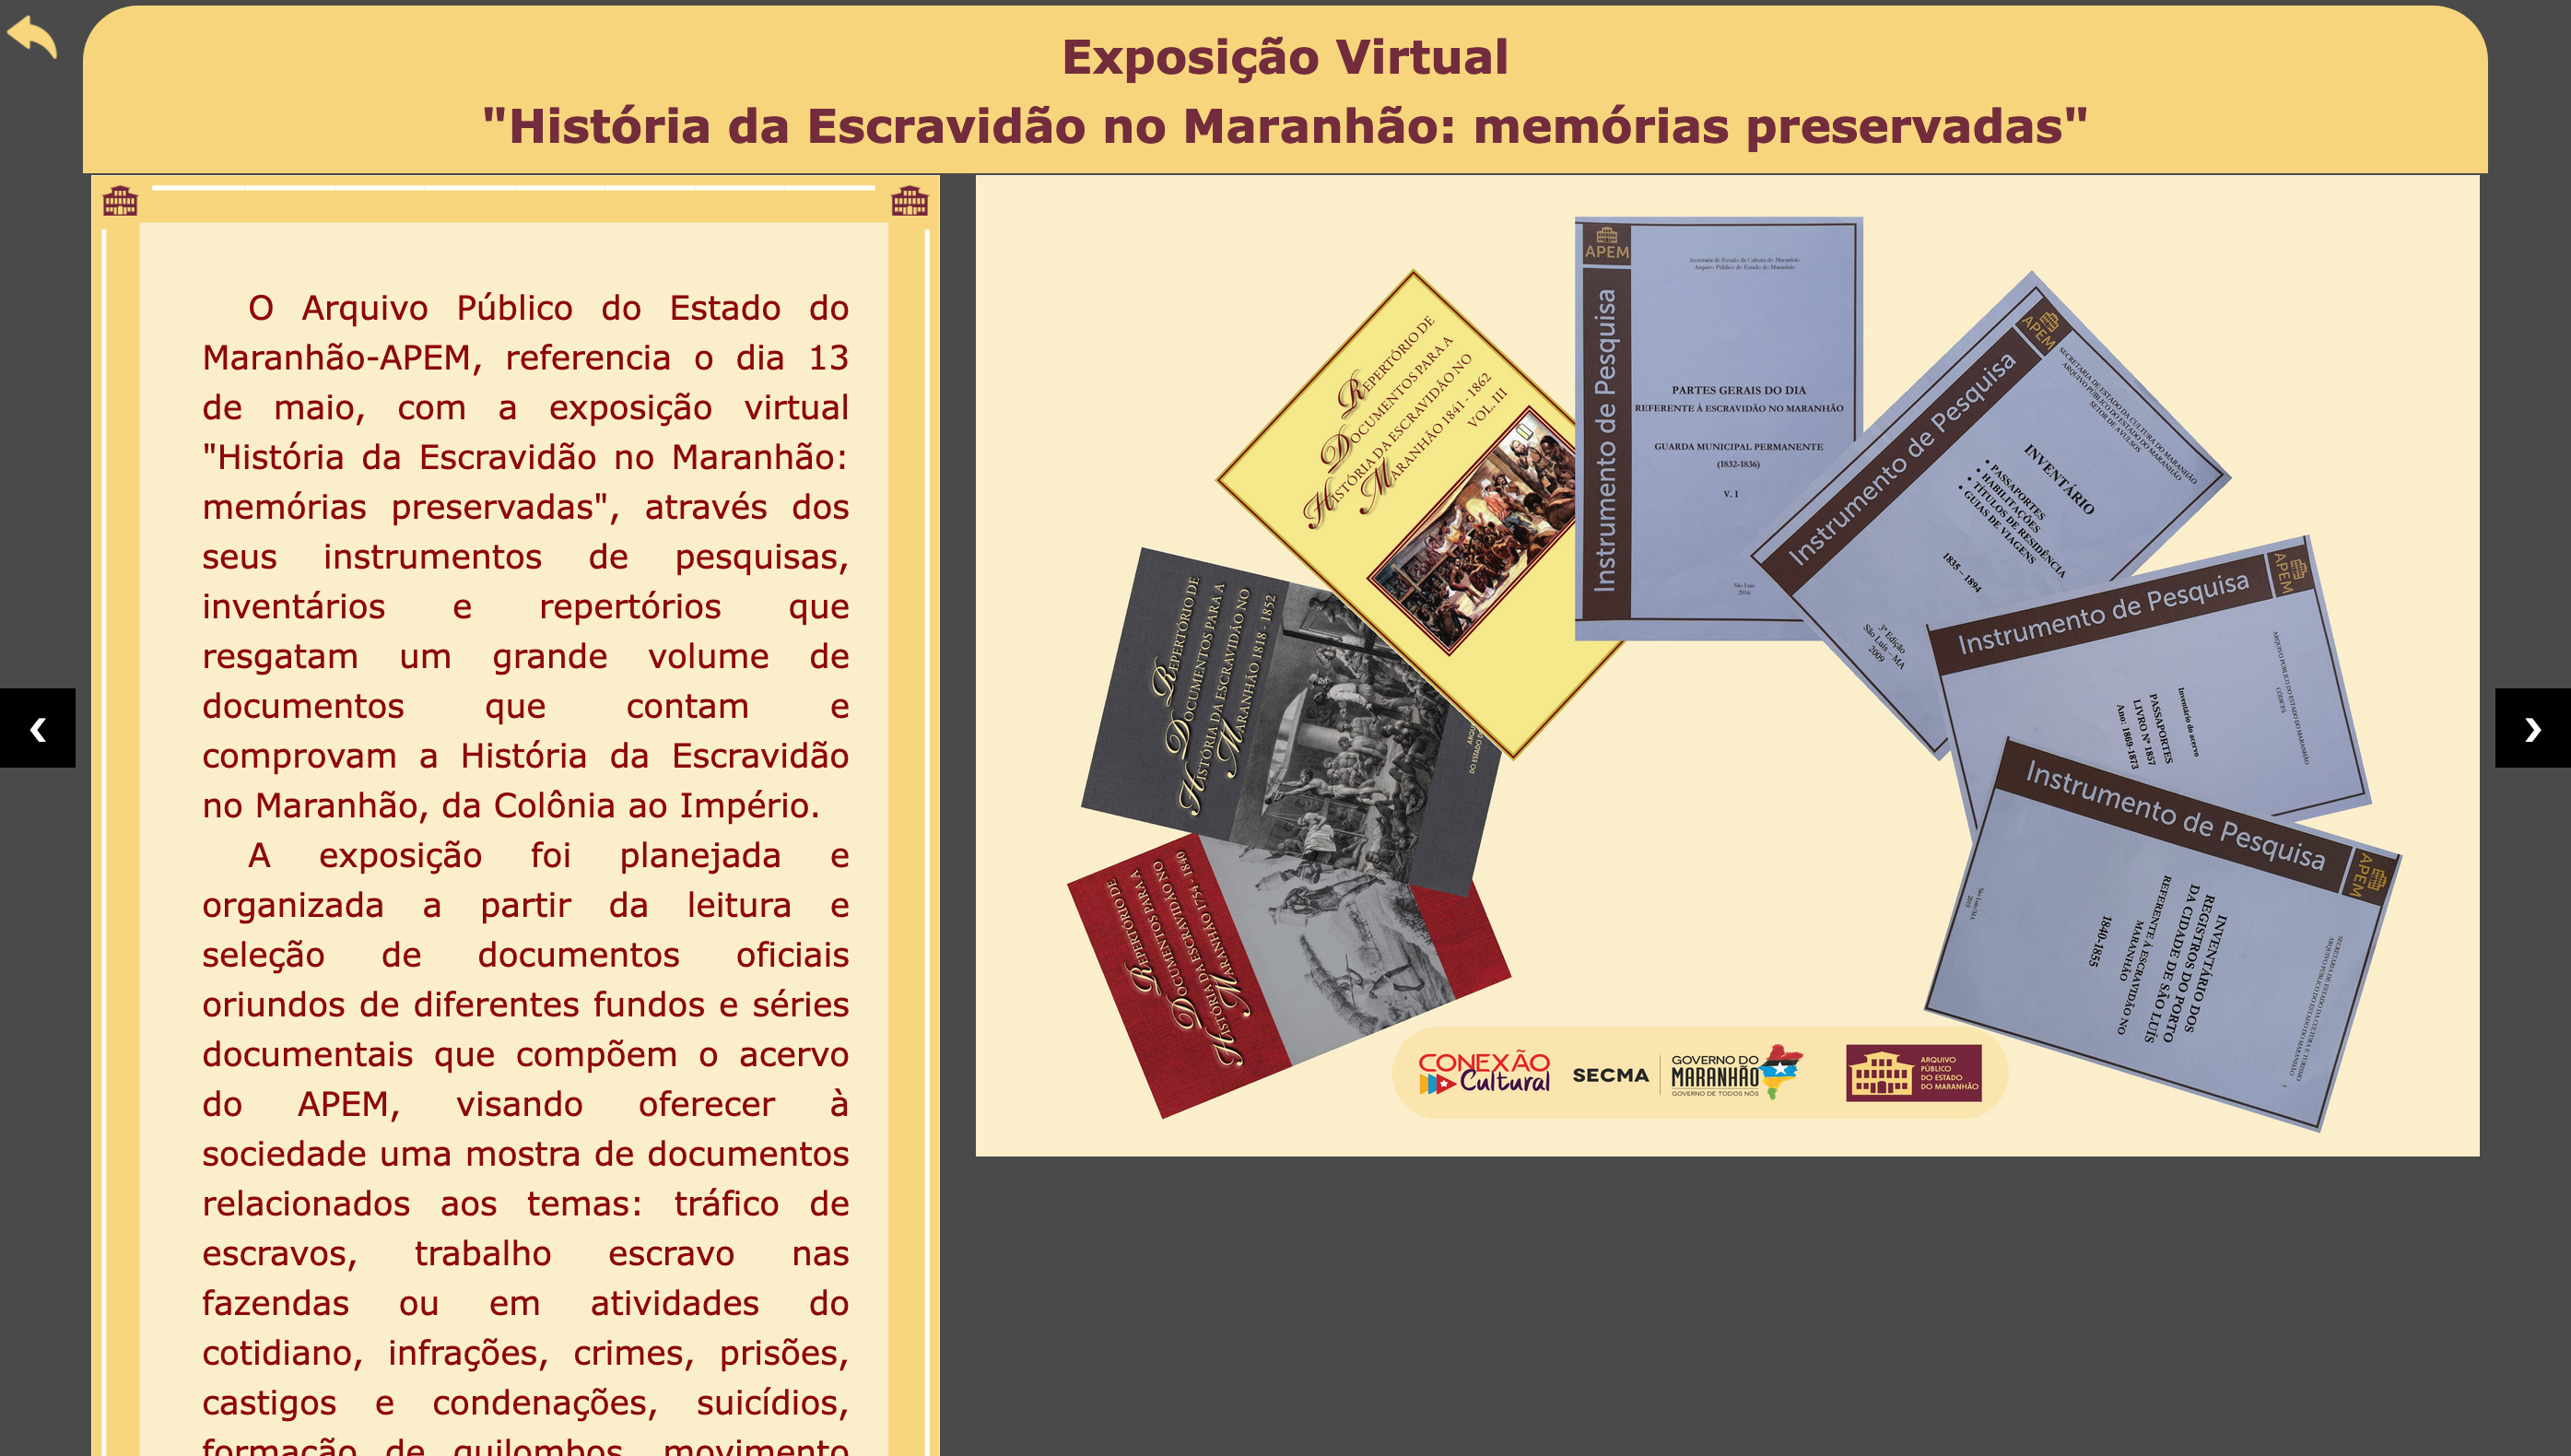 Virtual Exhibition "History of Slavery in Maranhão: Preserved Memories"